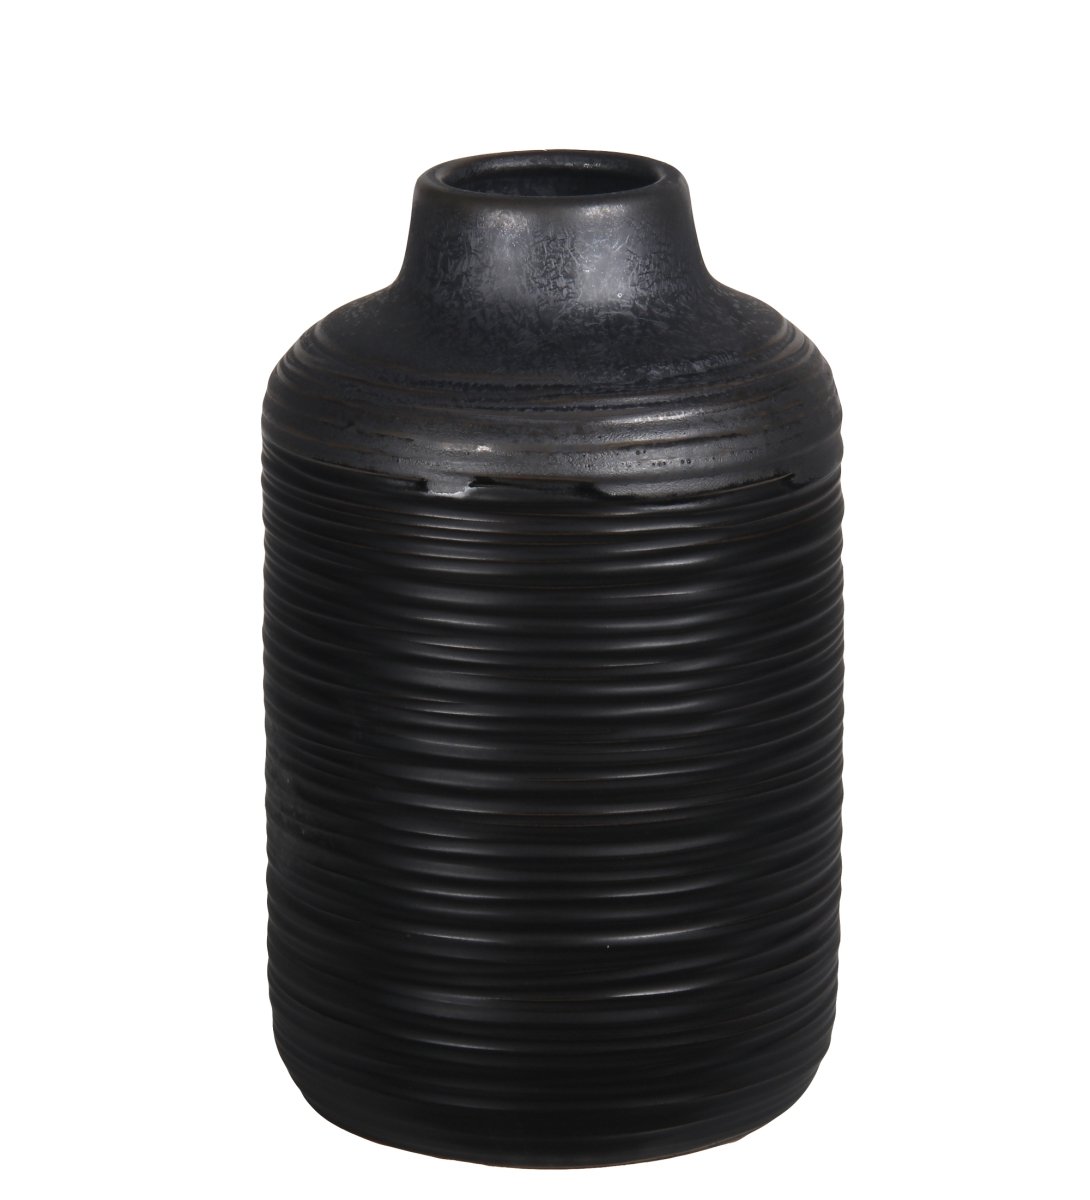 78205 6 X 6 X 10 In. Contemporary Ceramic Vase, Ribbed Black & Gray, Small